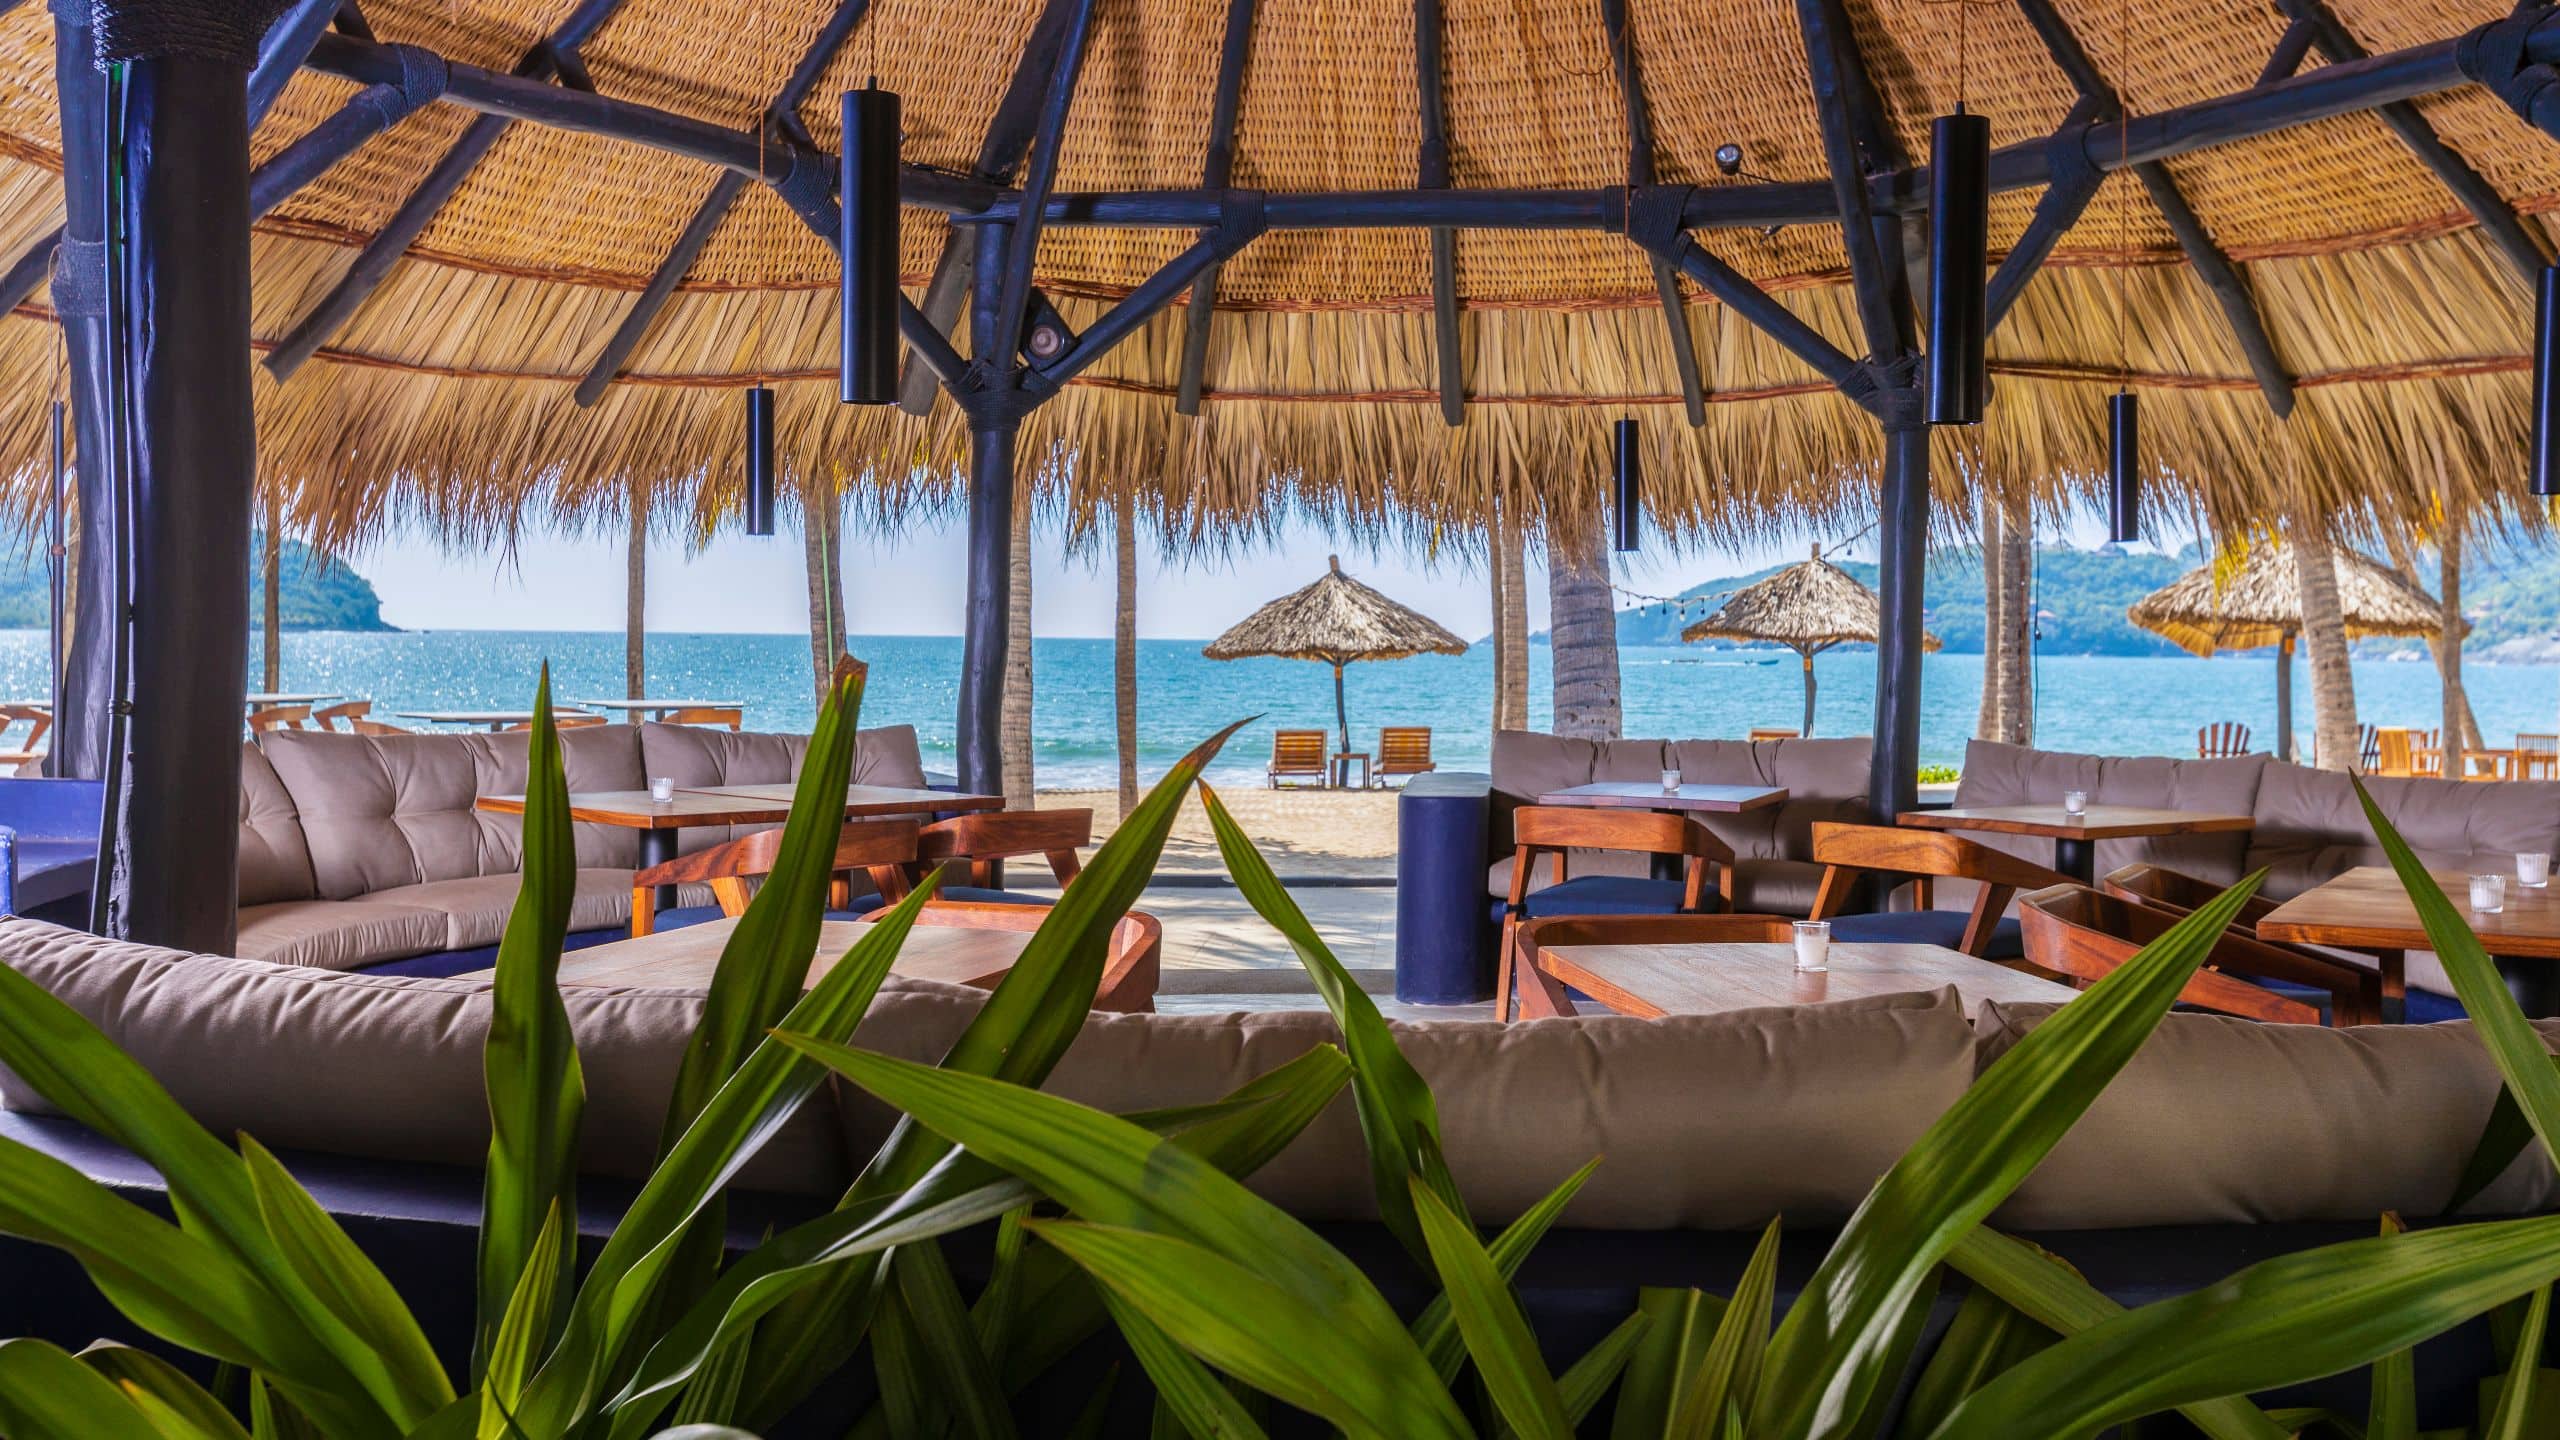 Thompson Zihuatanejo, a Beach Resort Beach Side Lounge Seating